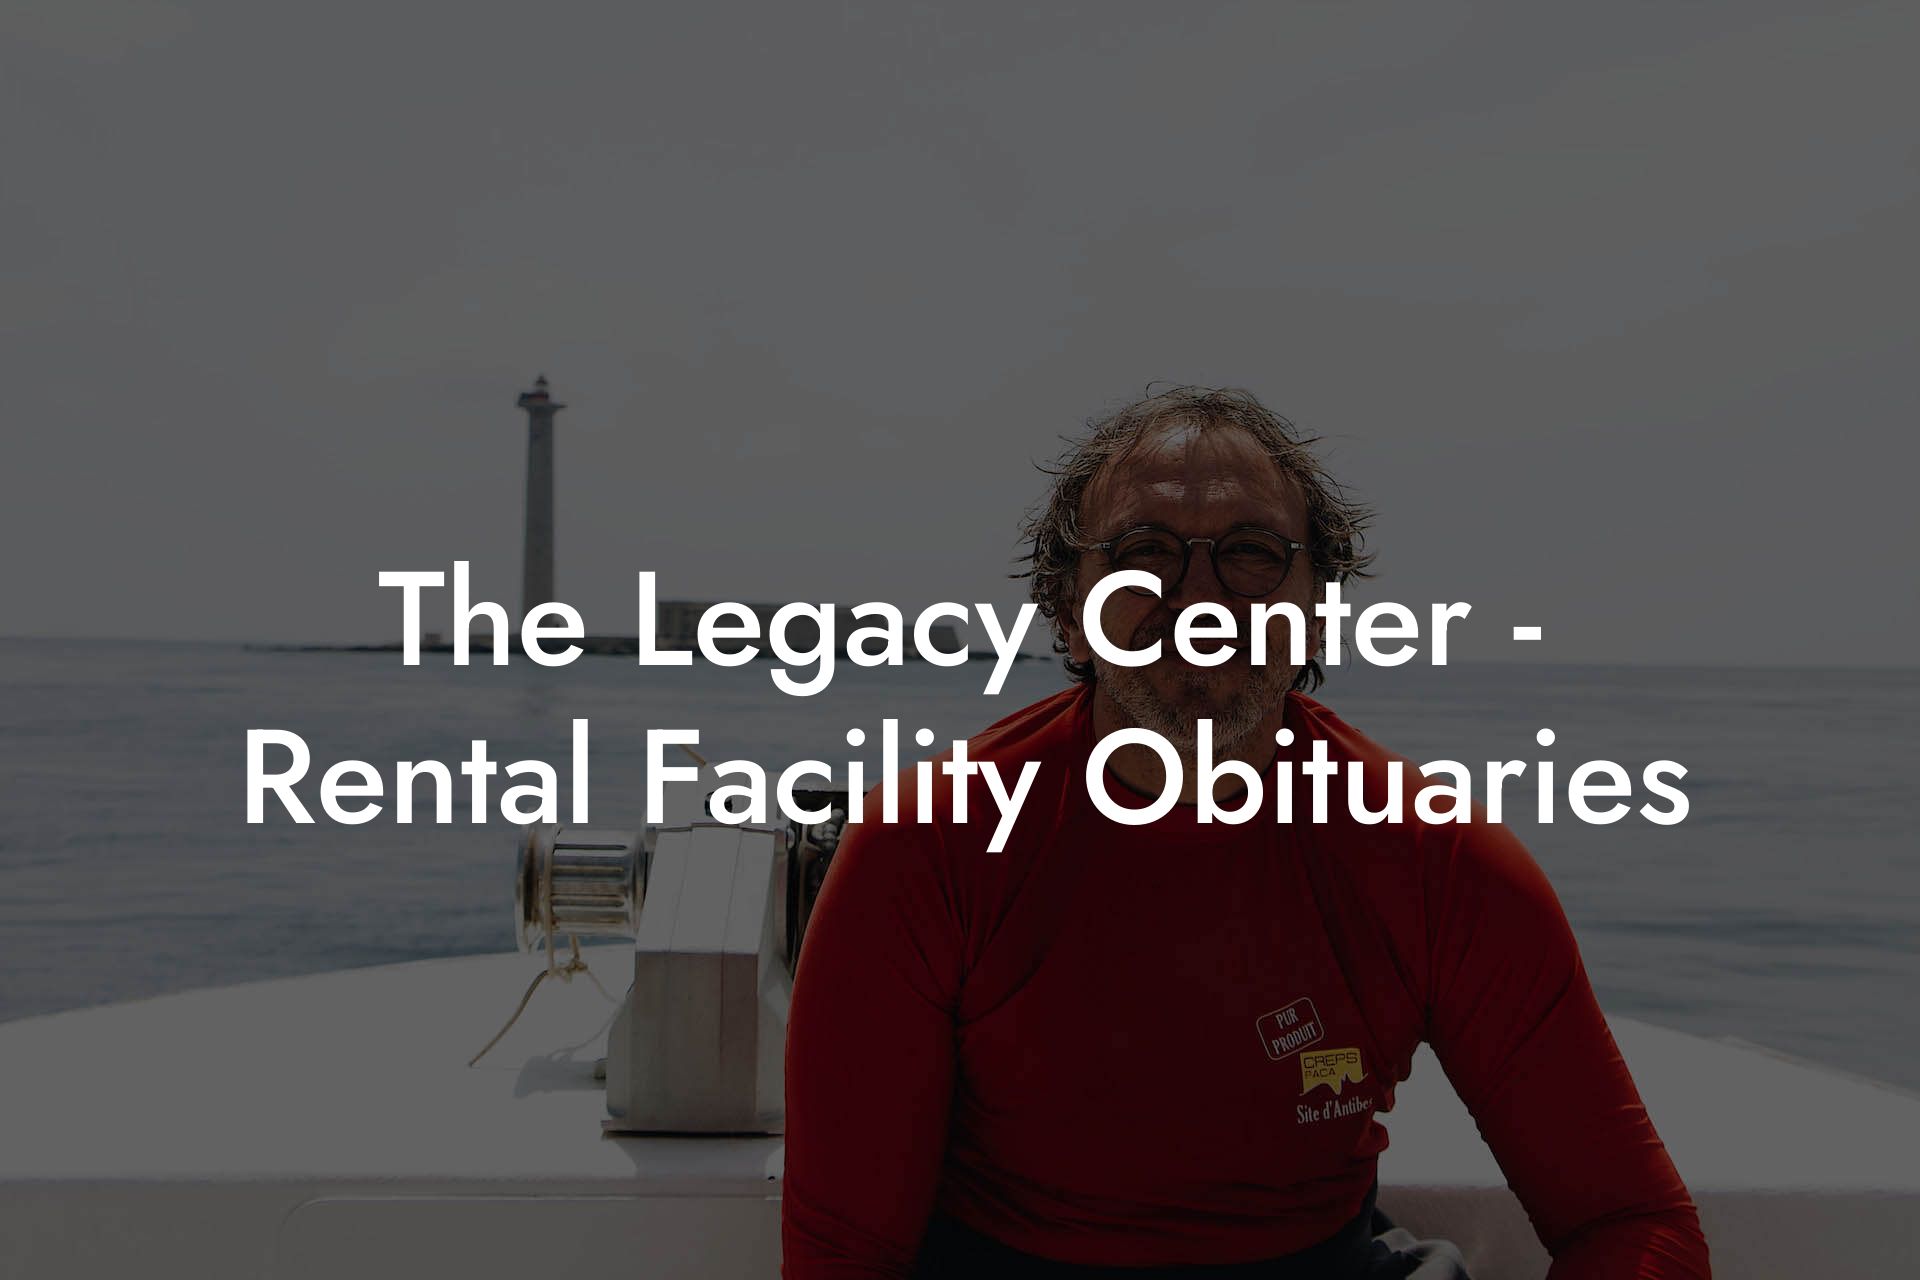 The Legacy Center - Rental Facility Obituaries